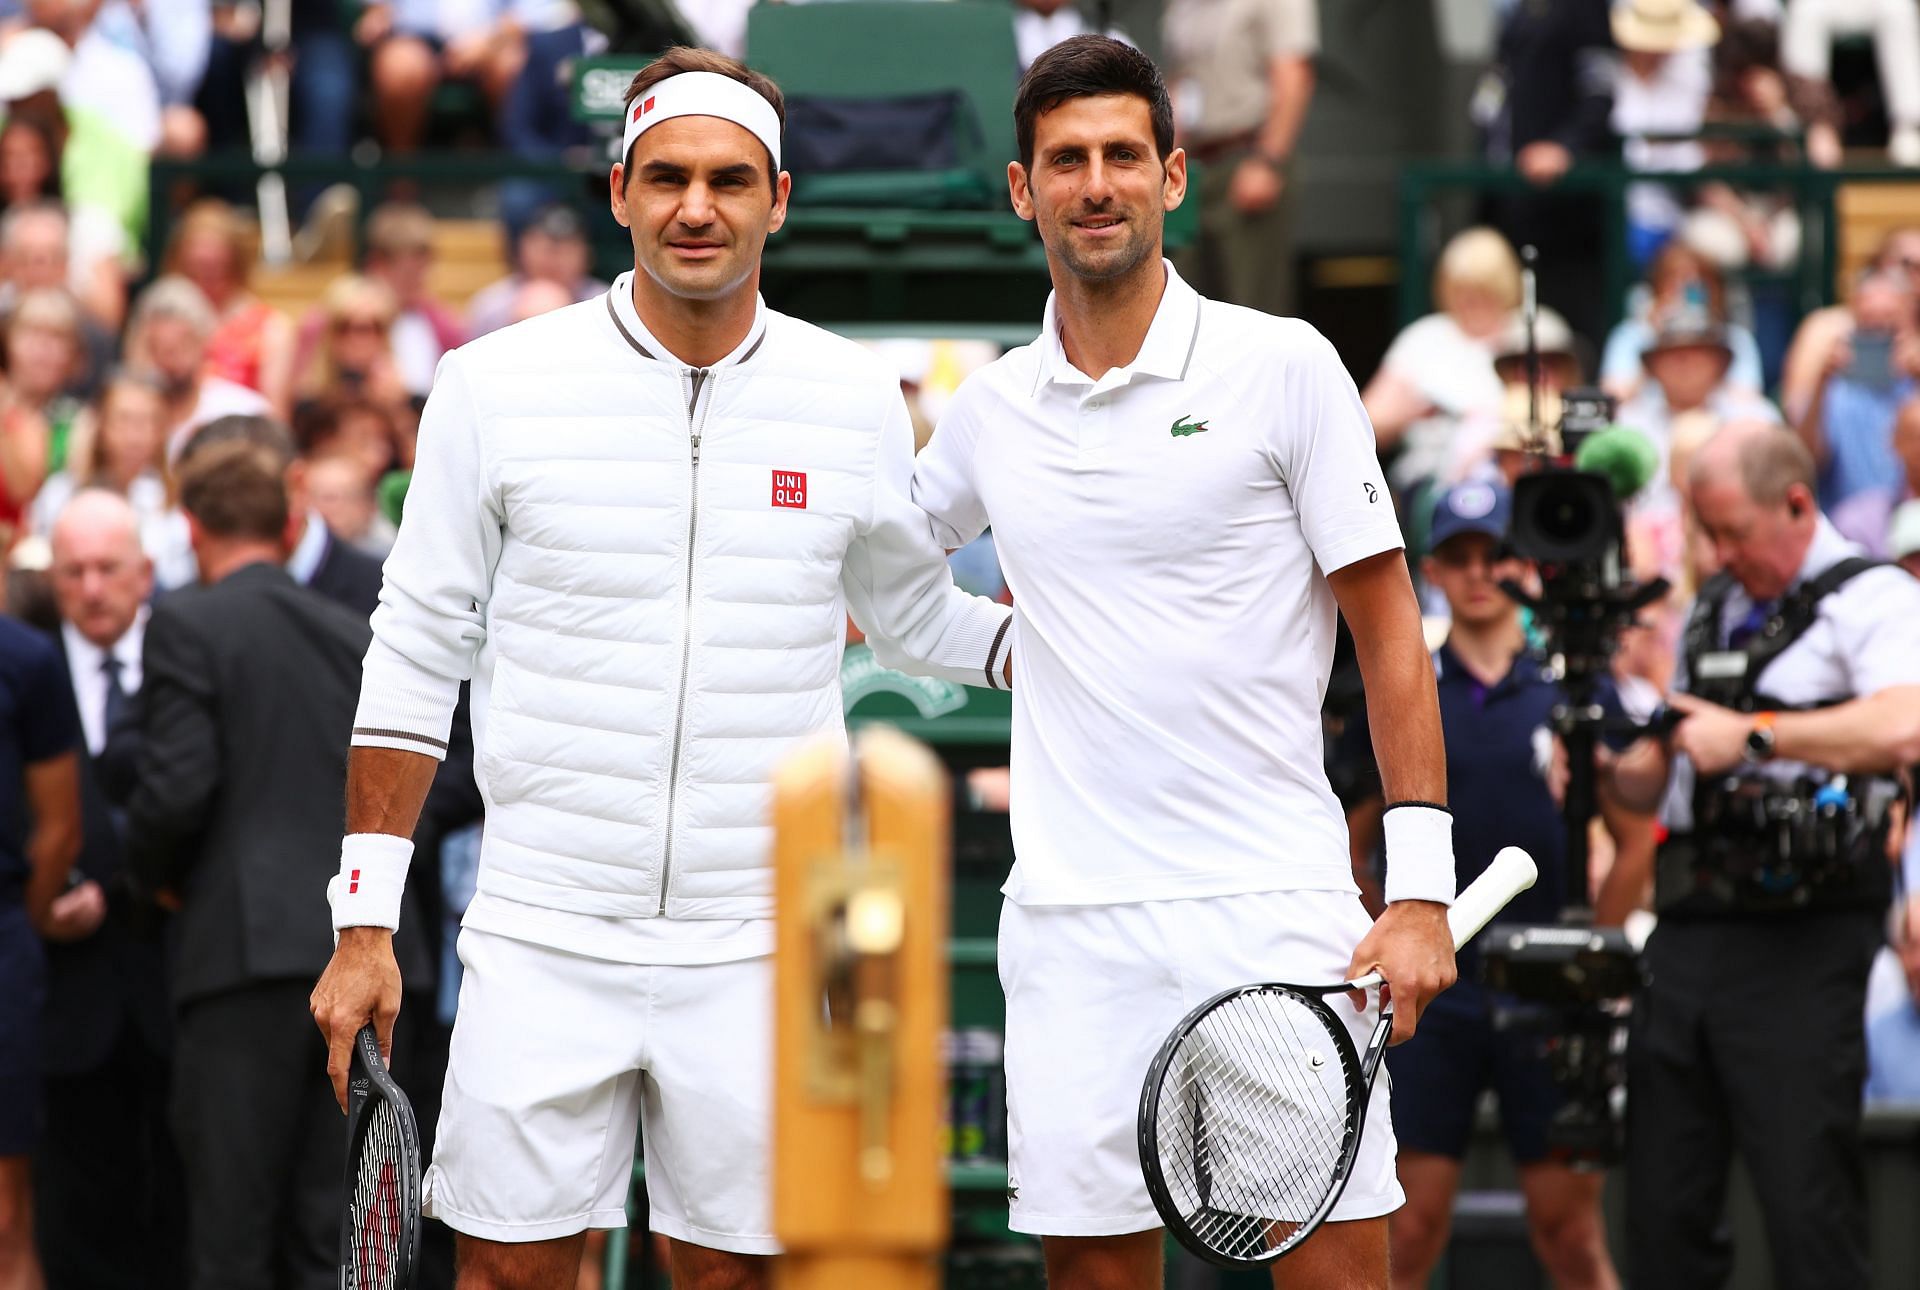 Day 13: The Championships - Wimbledon 2019